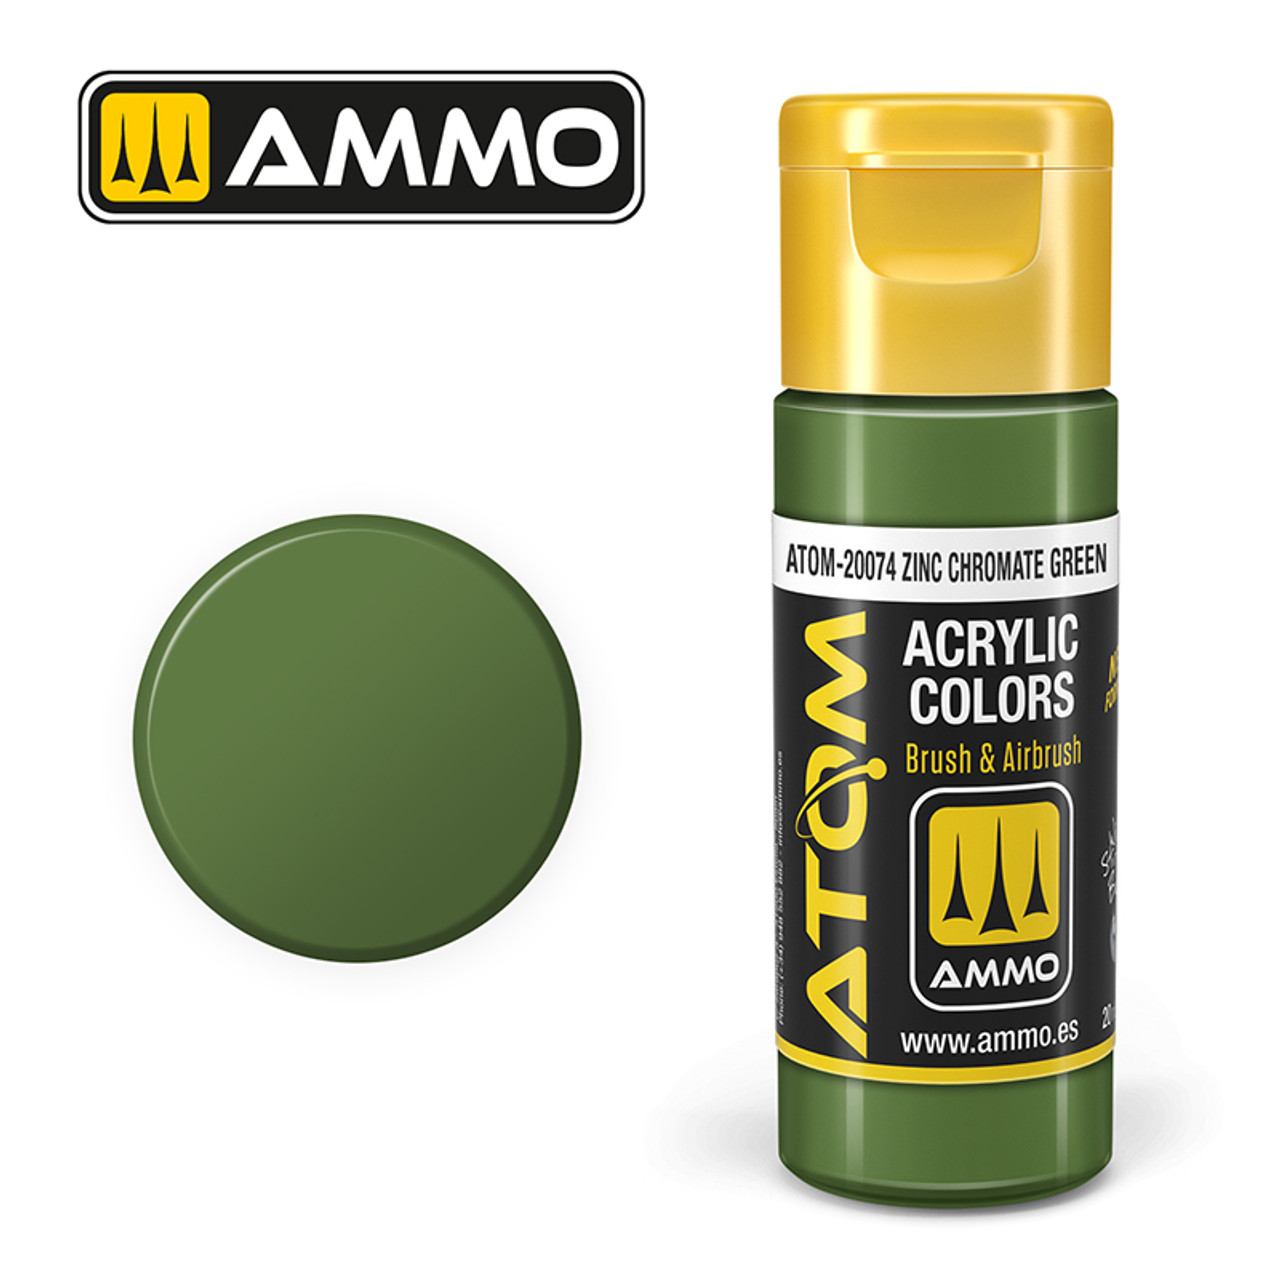 20074 ATOM Acrylic Paint - Zinc Chromate Green RAL6011 - FS34151 (20ml)